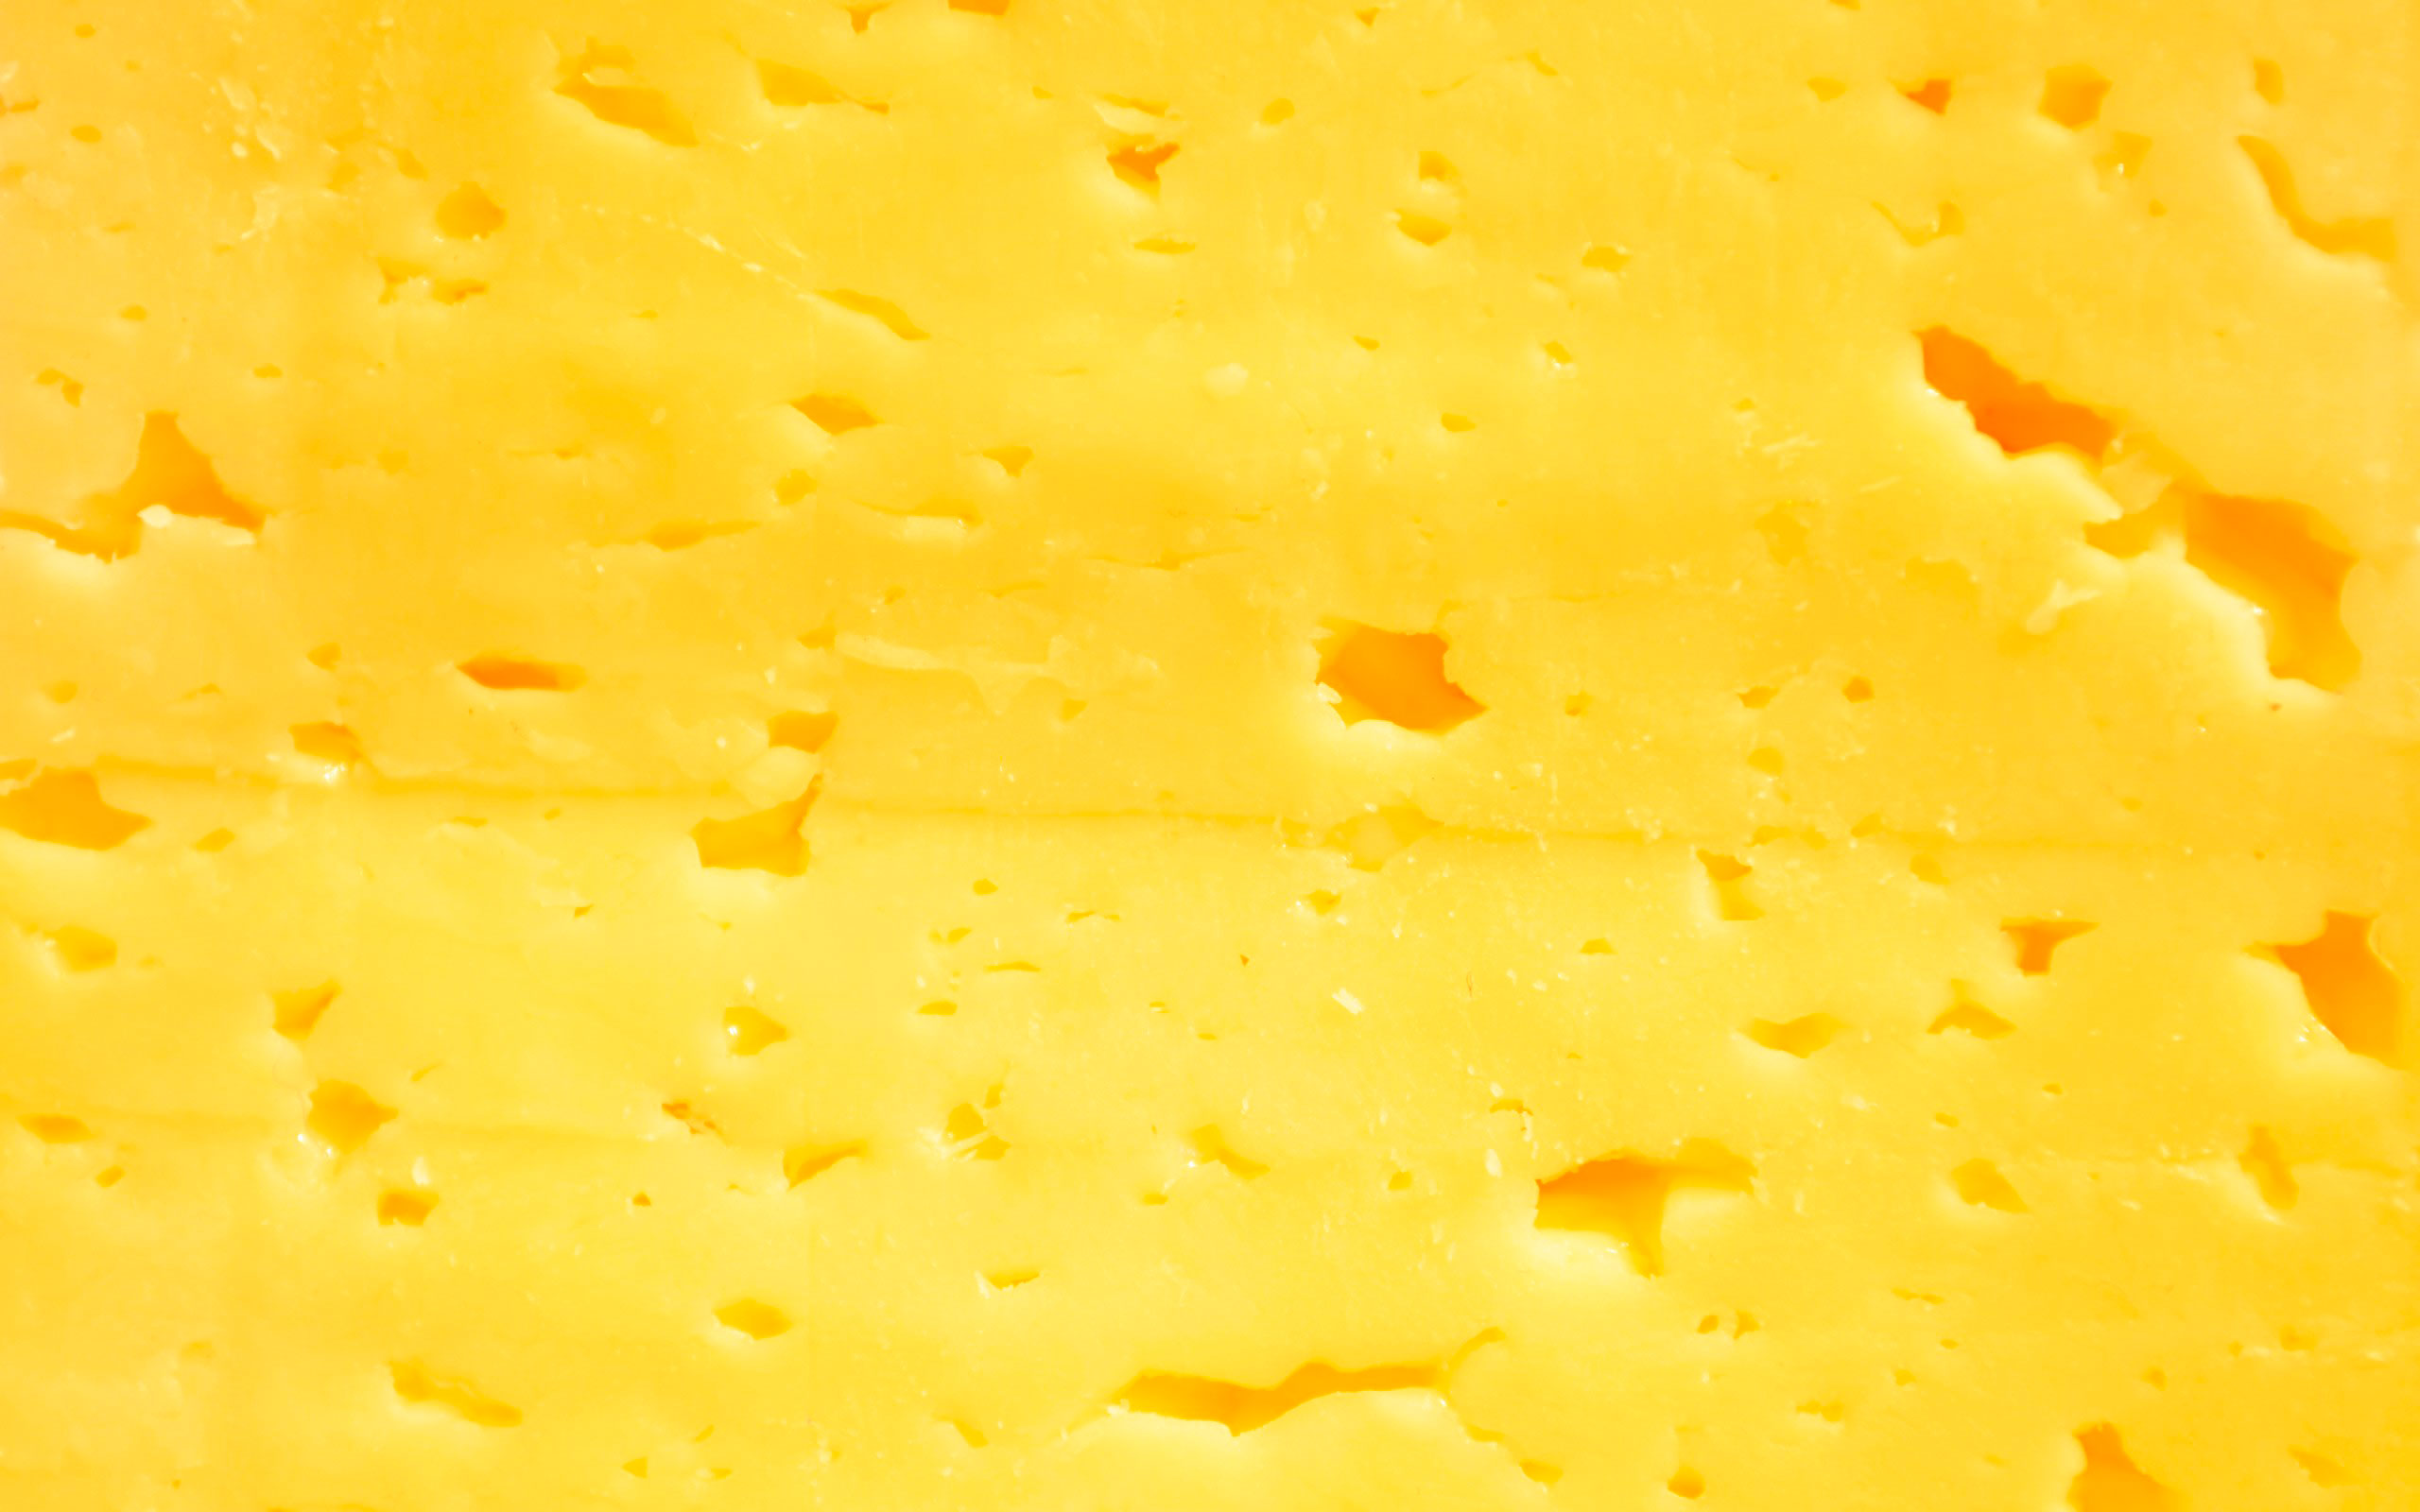 съедобная текстура, сыр, желтый фон, креатив обои, Edible texture, cheese, yellow background, creative wallpaper,